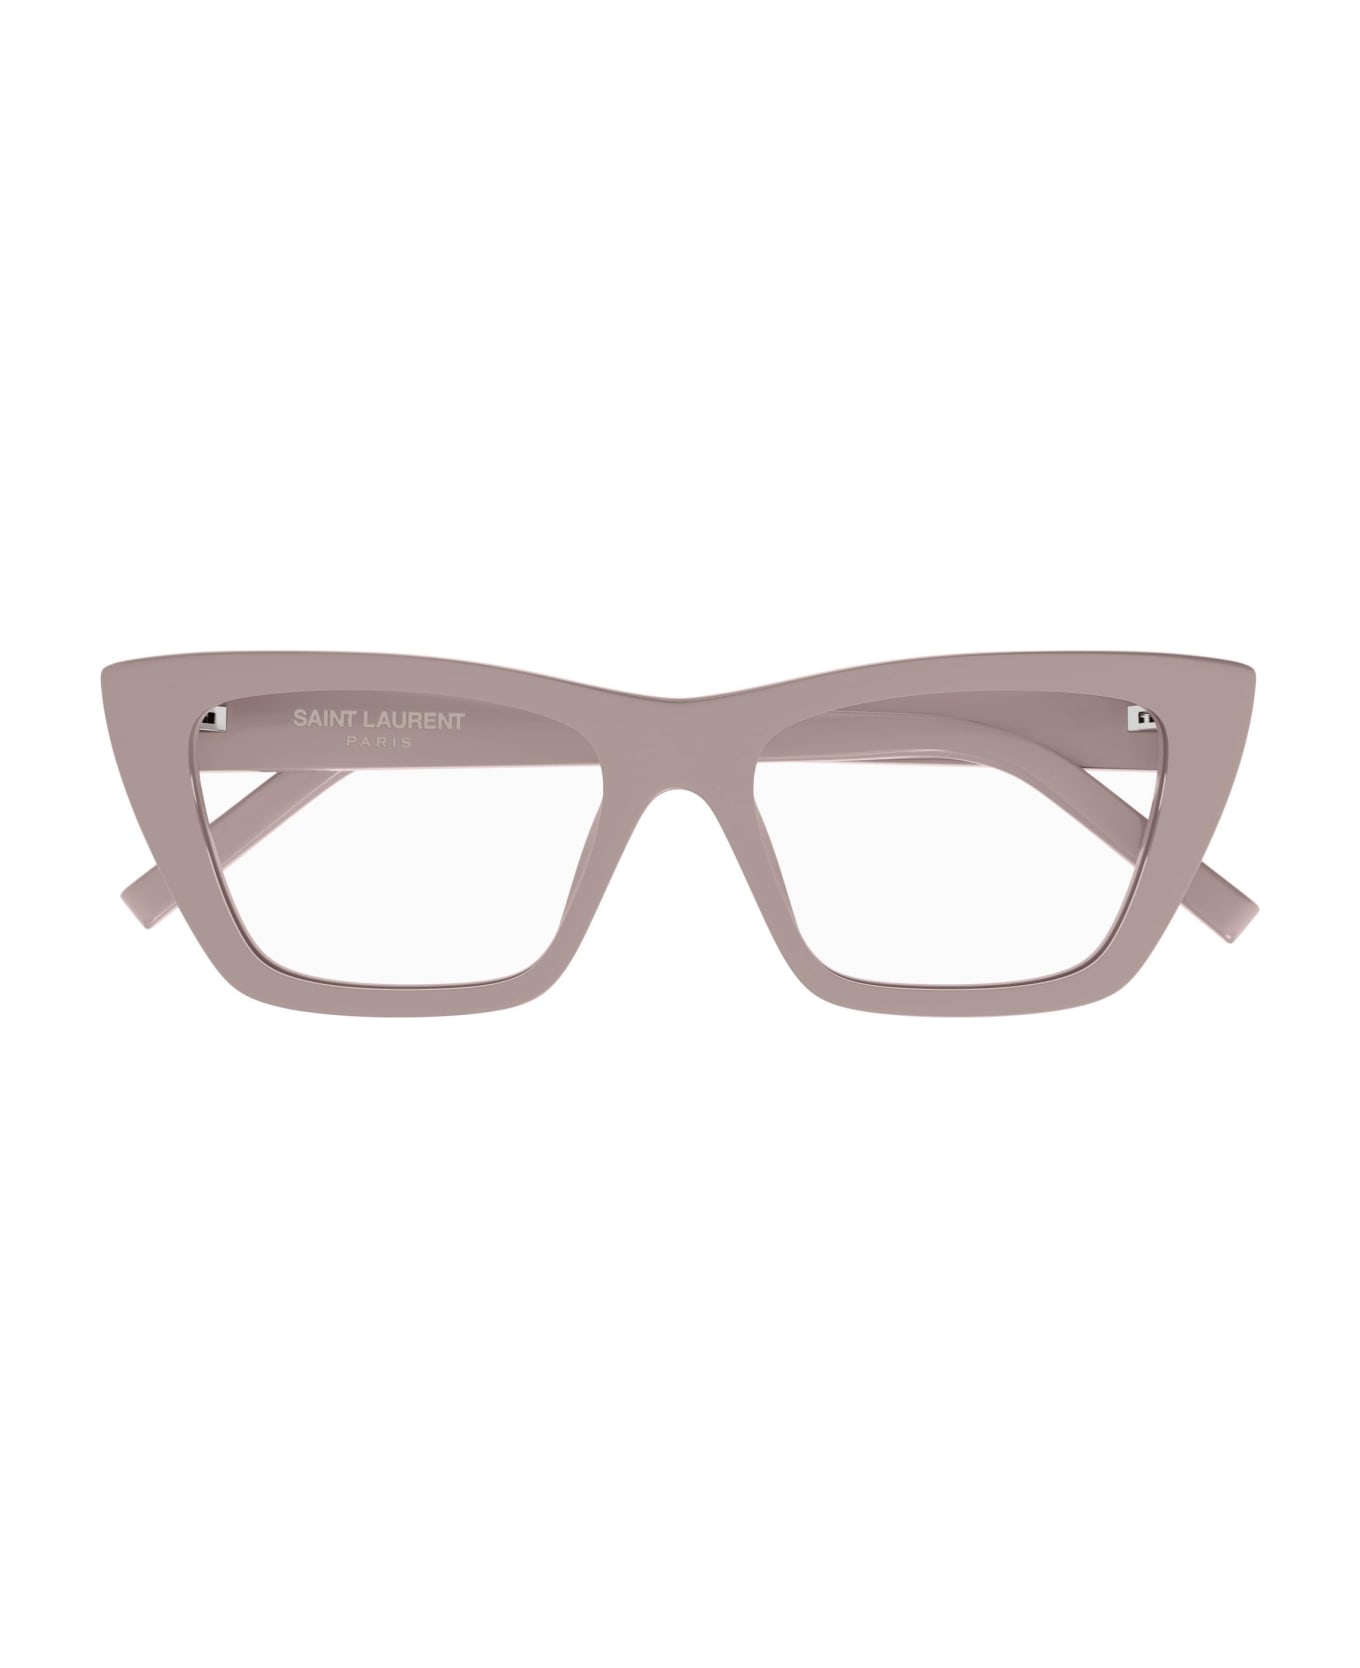 Saint Laurent Eyewear Glasses - Rosa